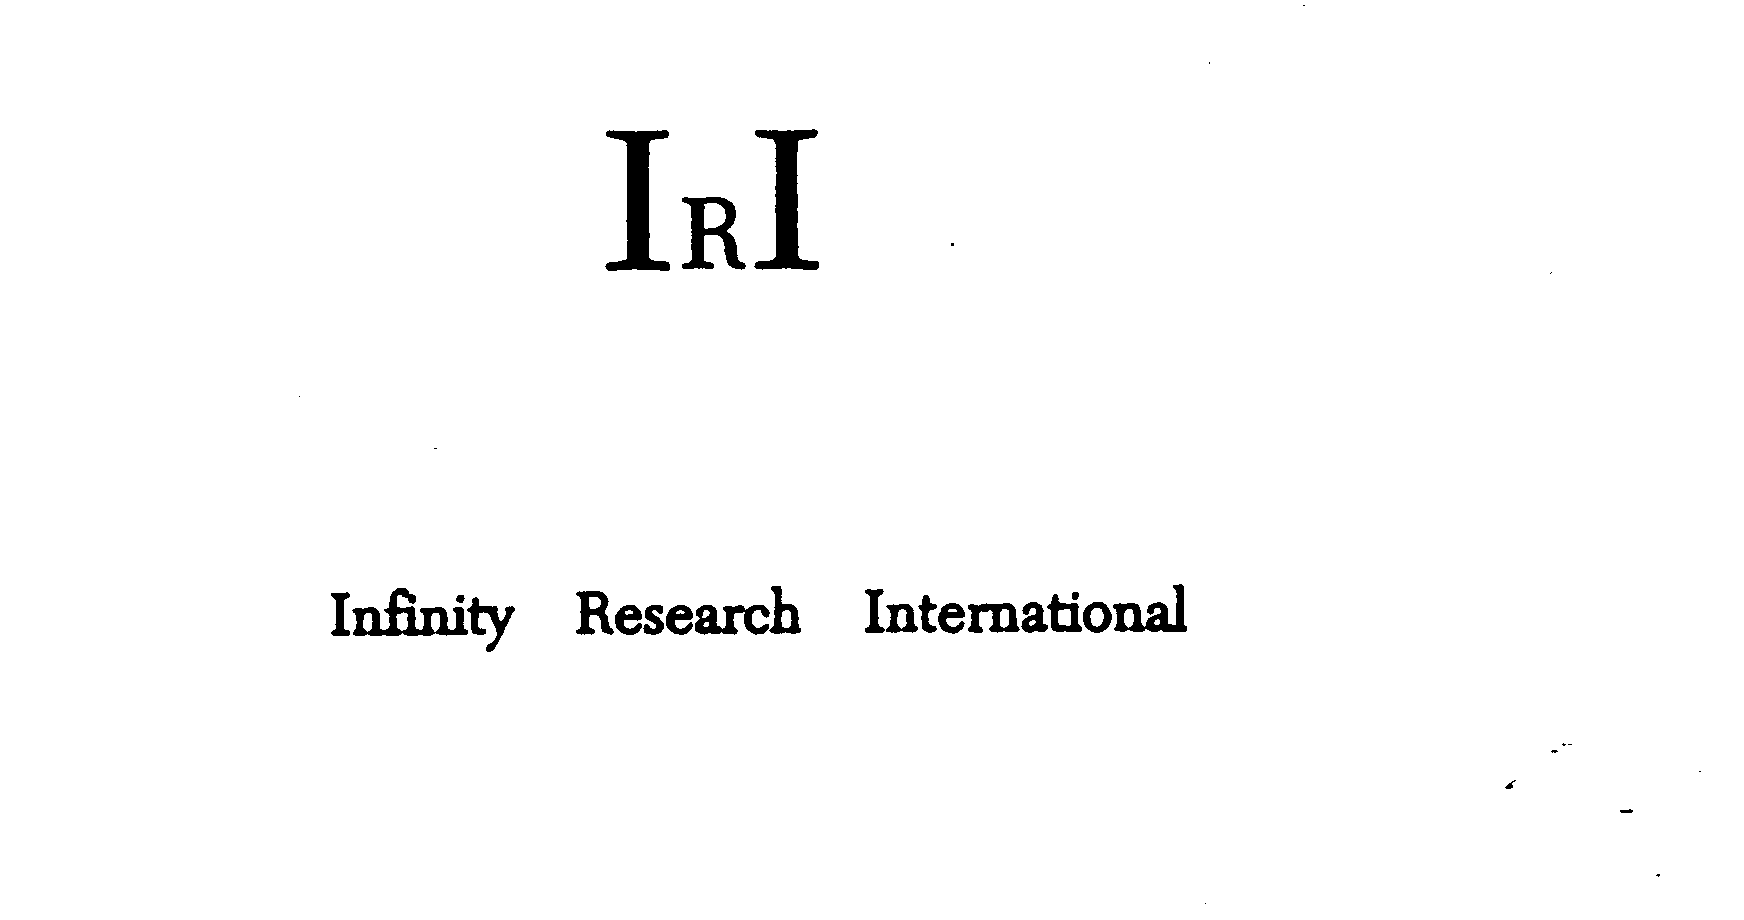  IRI INFINITY RESEARCH INTERNATIONAL